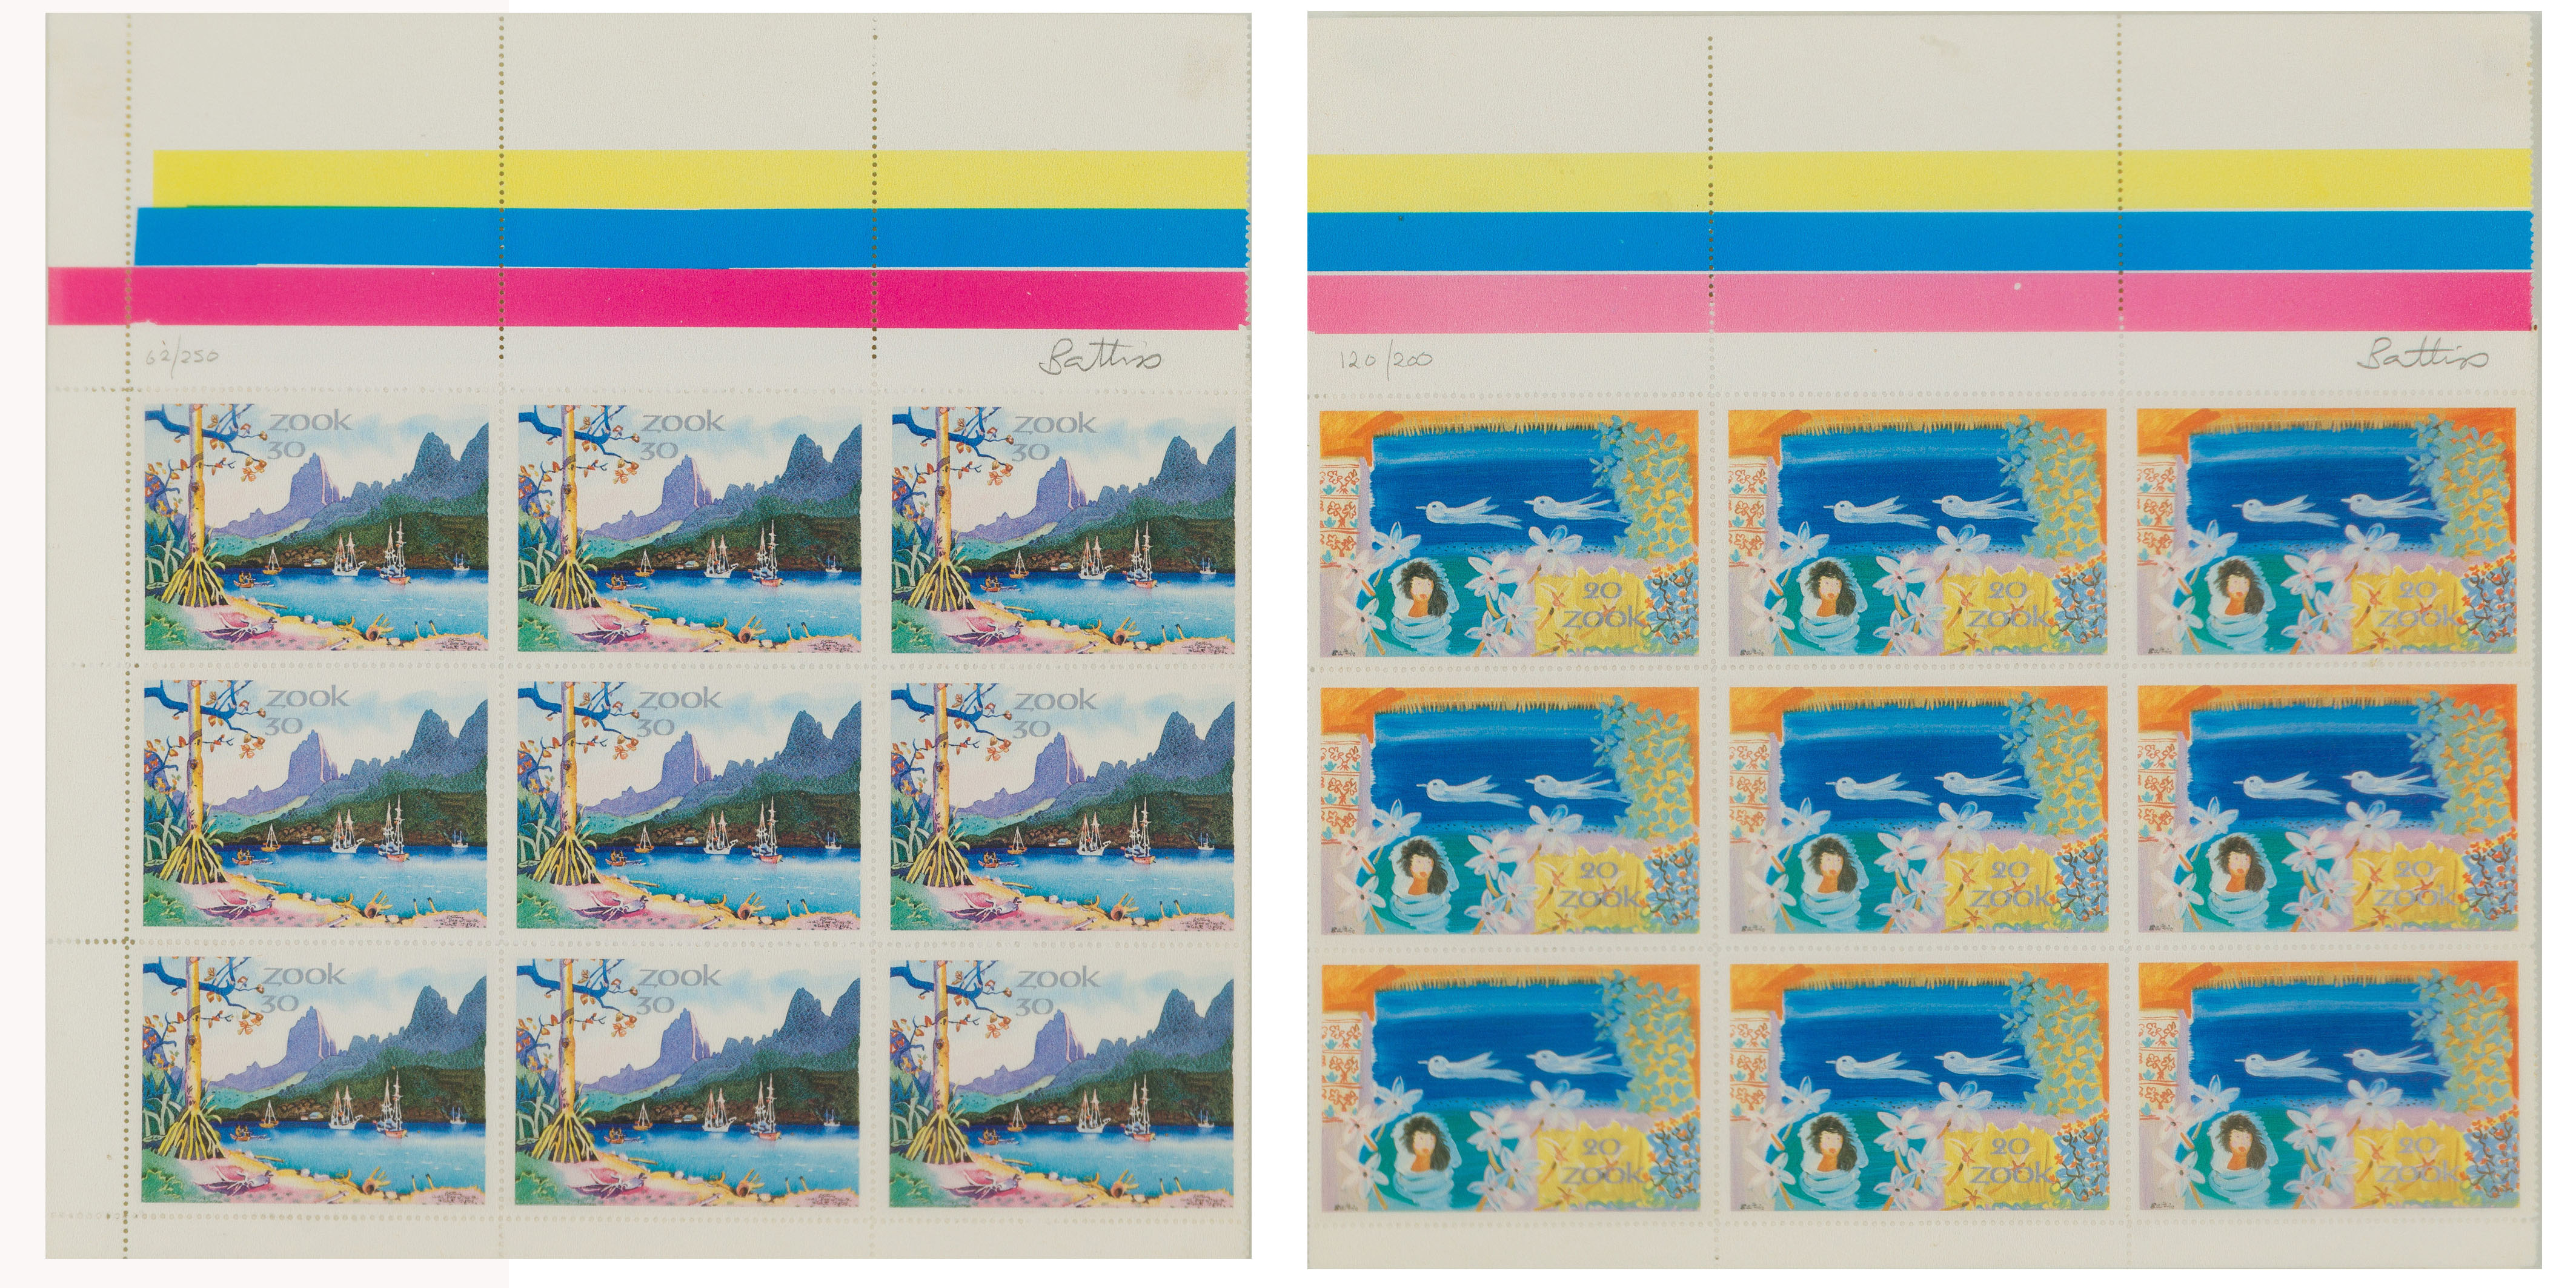 Walter Battiss; Fook Island Stamps